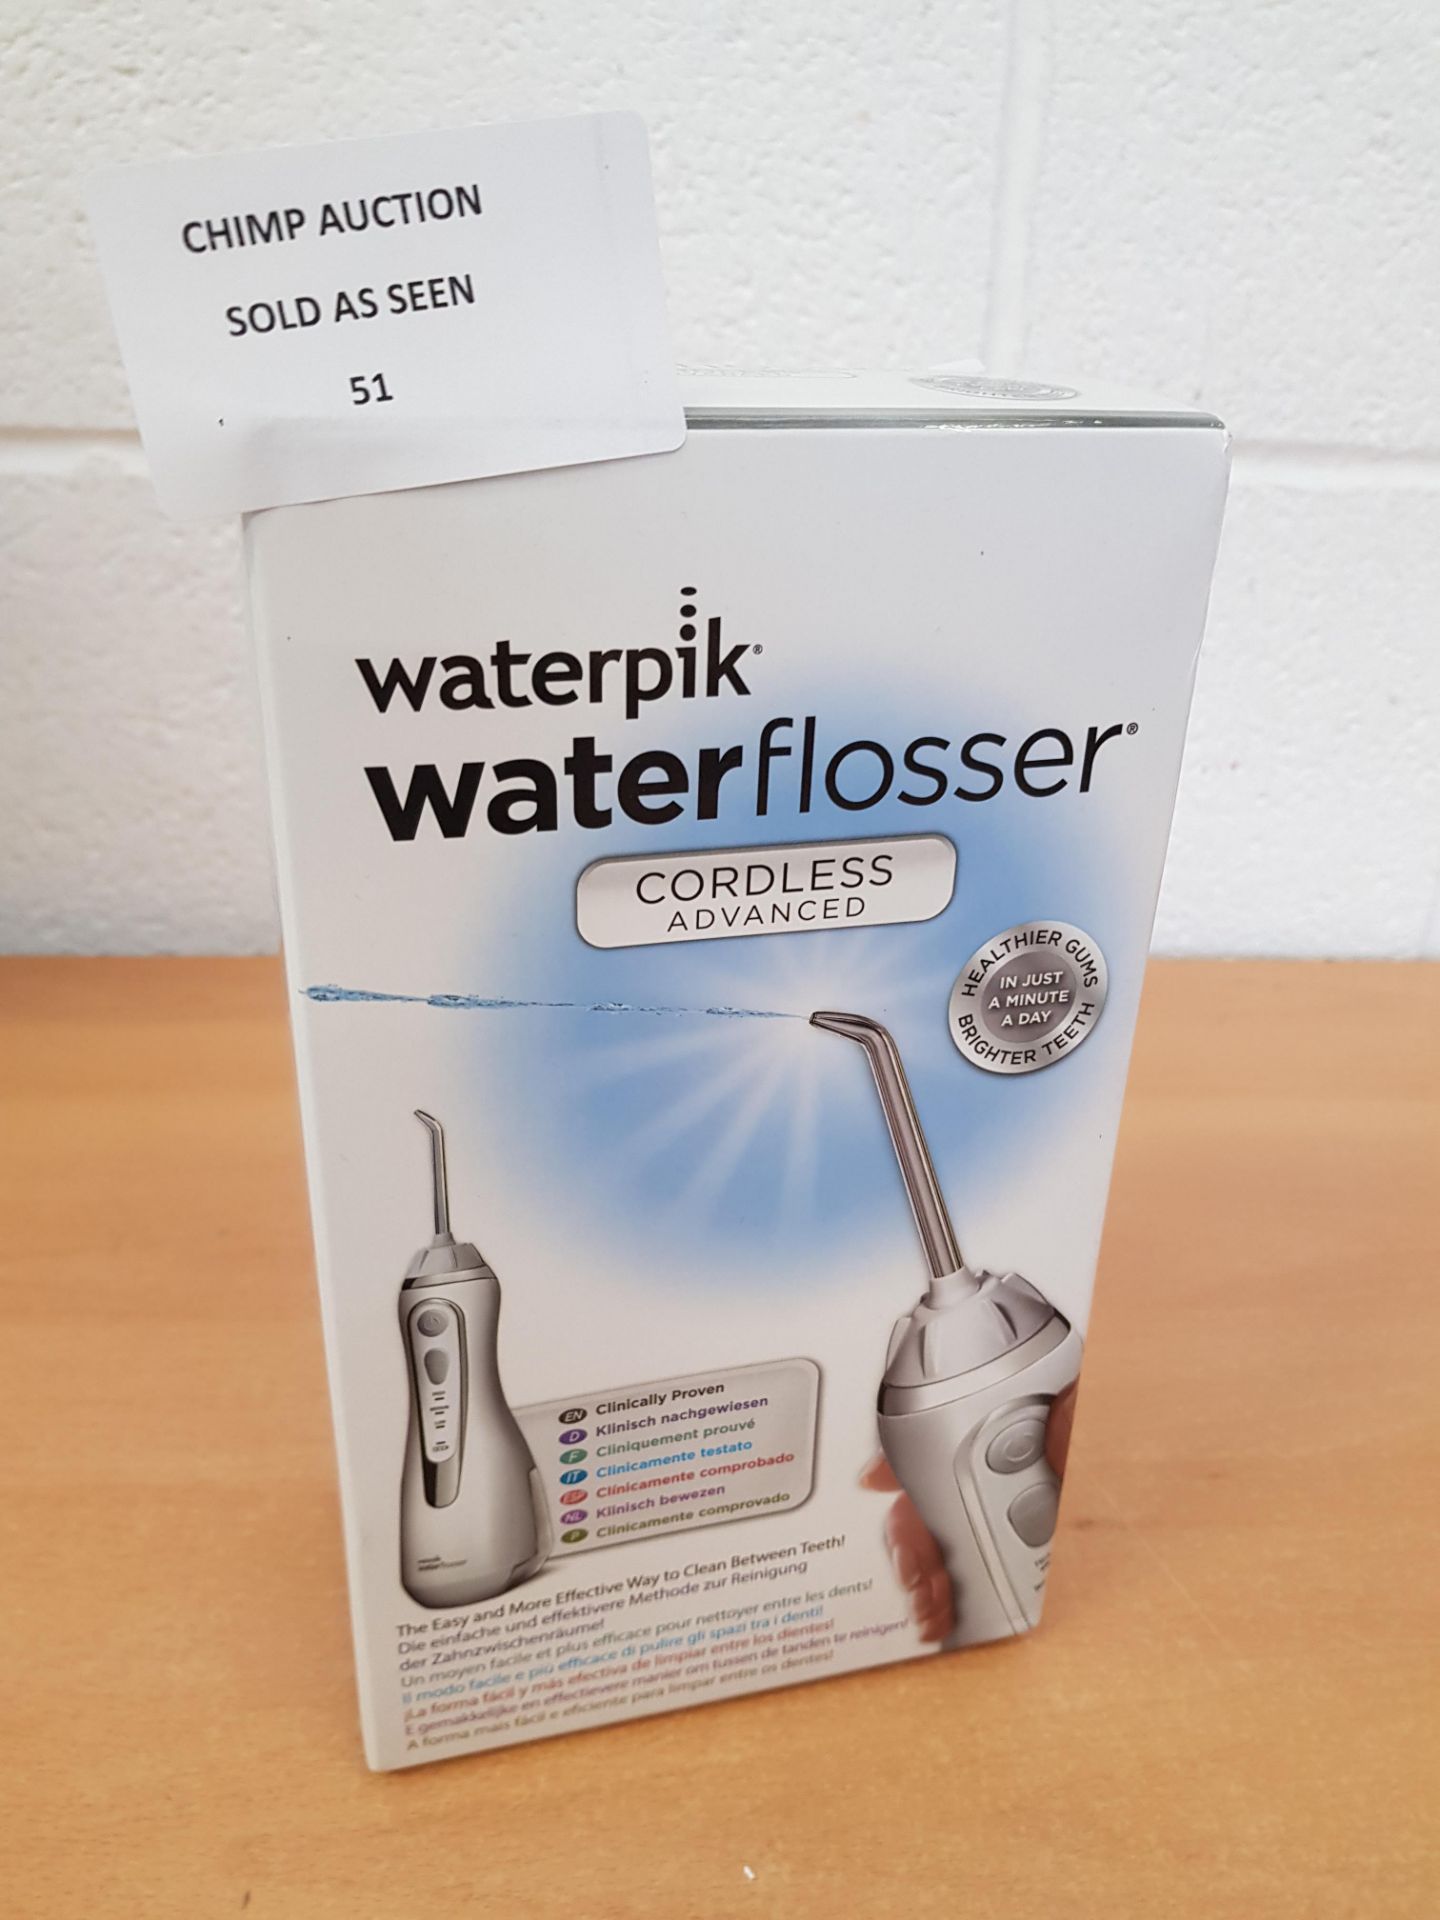 WaterPik WP-560 Water Flosser Cordless Advanced RRP £159.99.